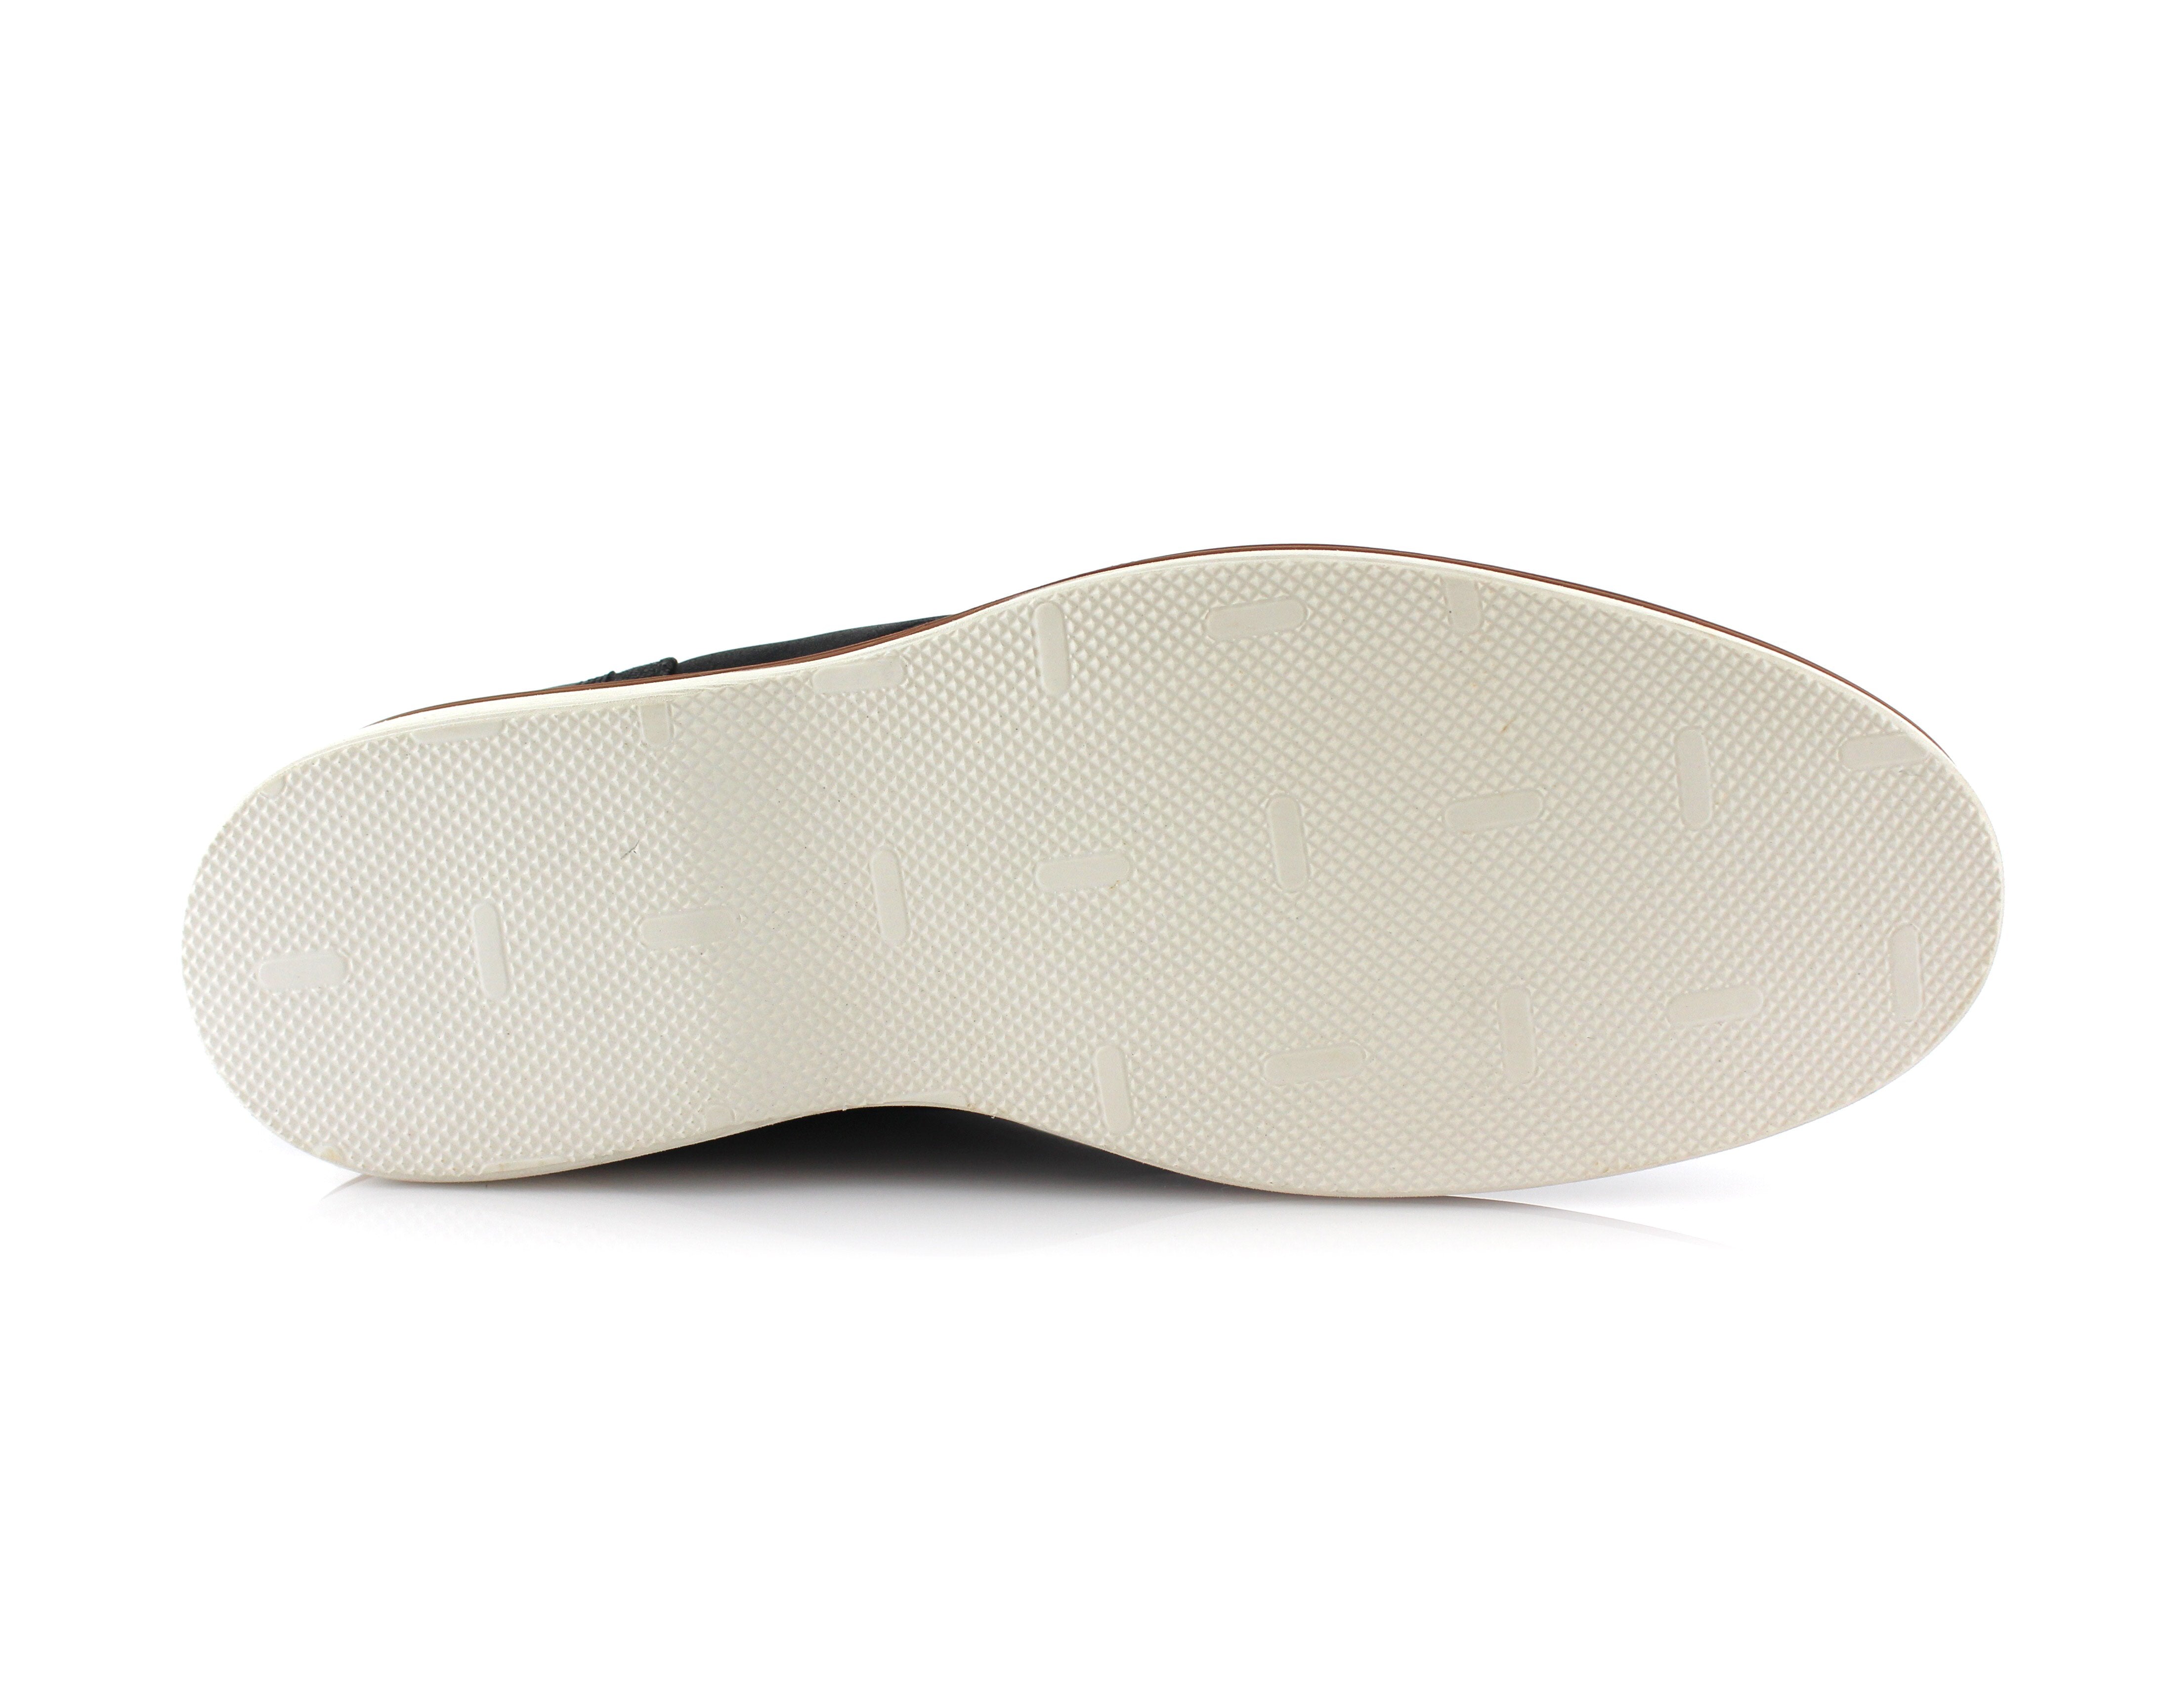 Cap-Toe Chukka Boots | Sammy by Ferro Aldo | Conal Footwear | Bottom Sole Angle View